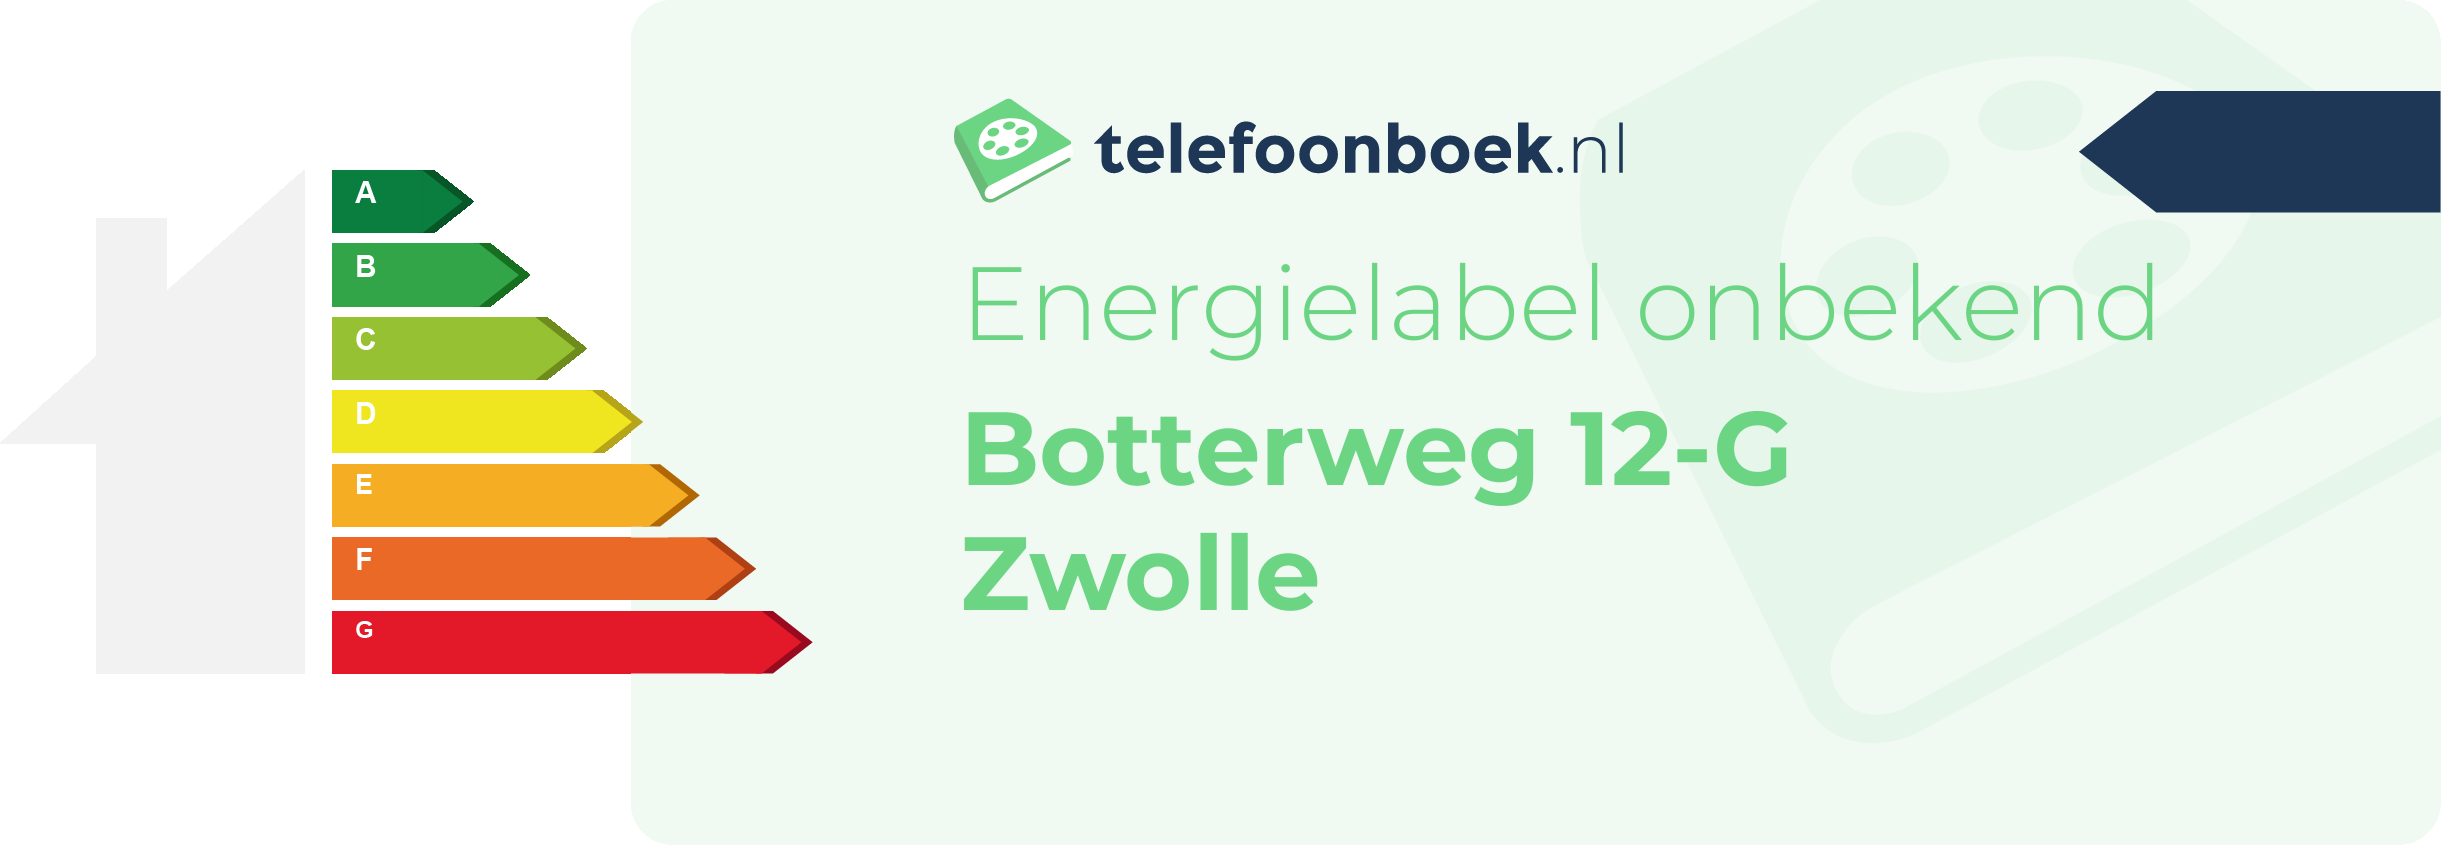 Energielabel Botterweg 12-G Zwolle